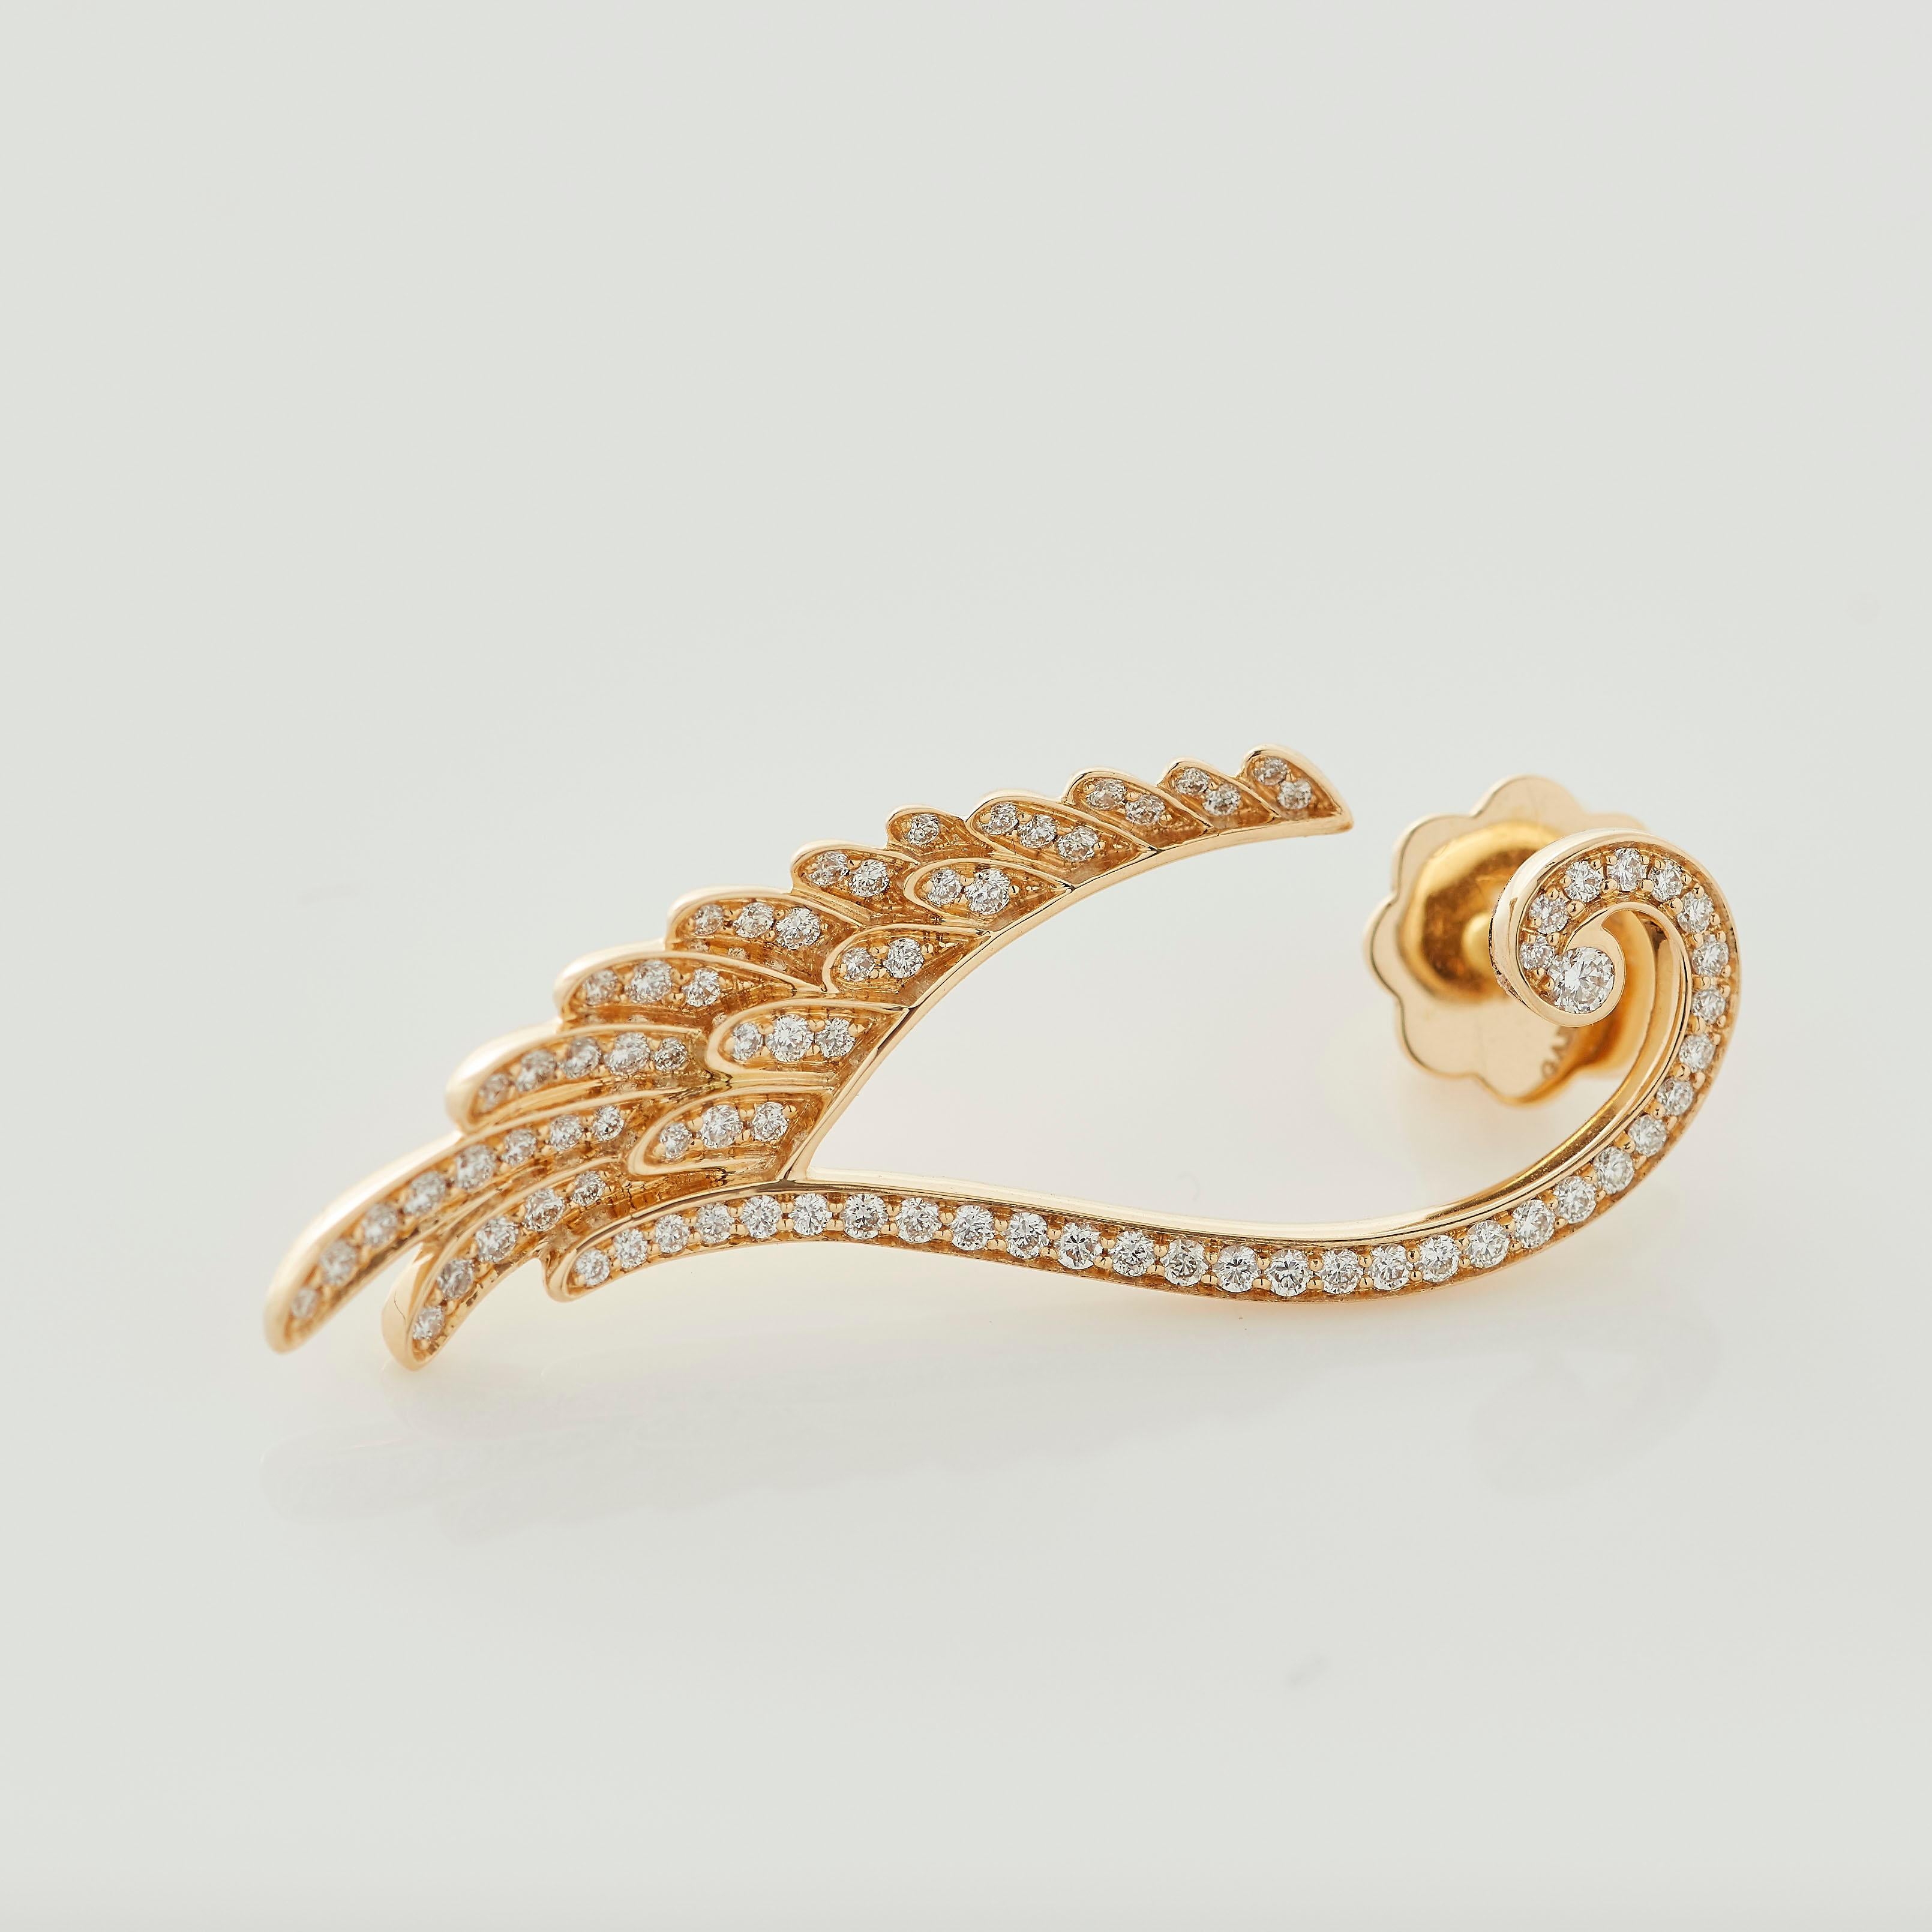 Garrard 'Wings Embrace' 18 Karat Yellow Gold and White Diamond Earrings For Sale 5